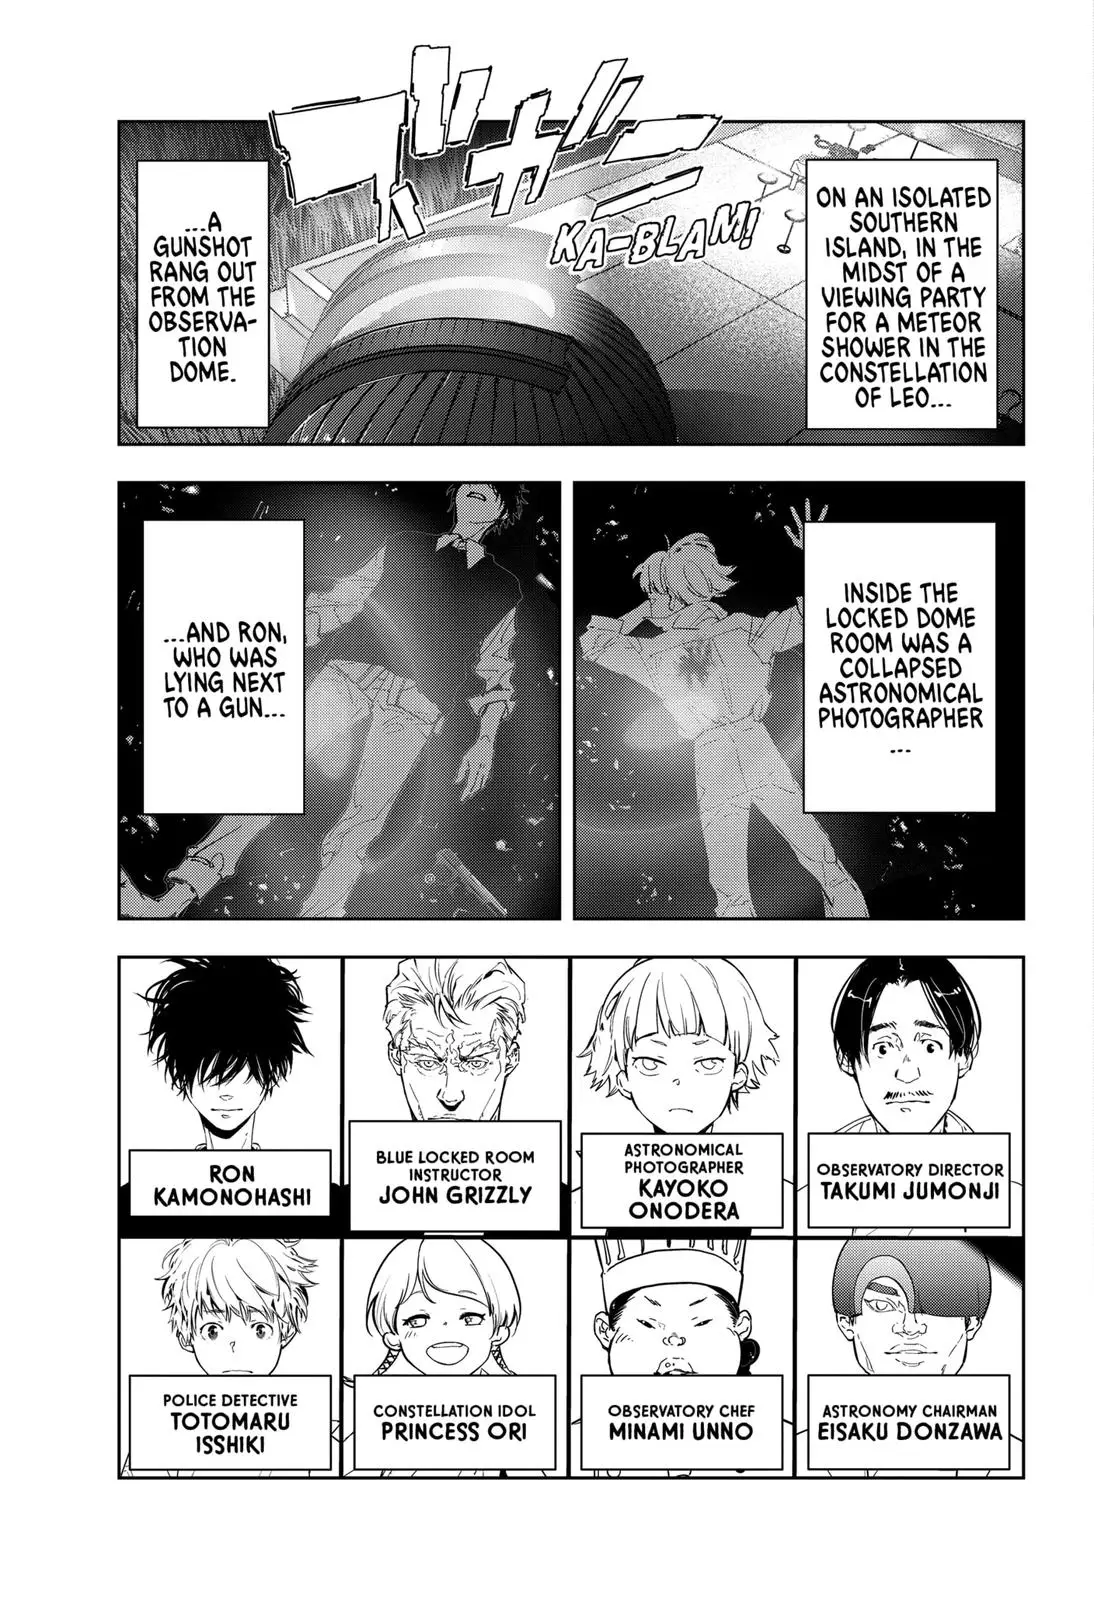 Kamonohashi Ron No Kindan Suiri - 10 page 2-8bf0f5f1